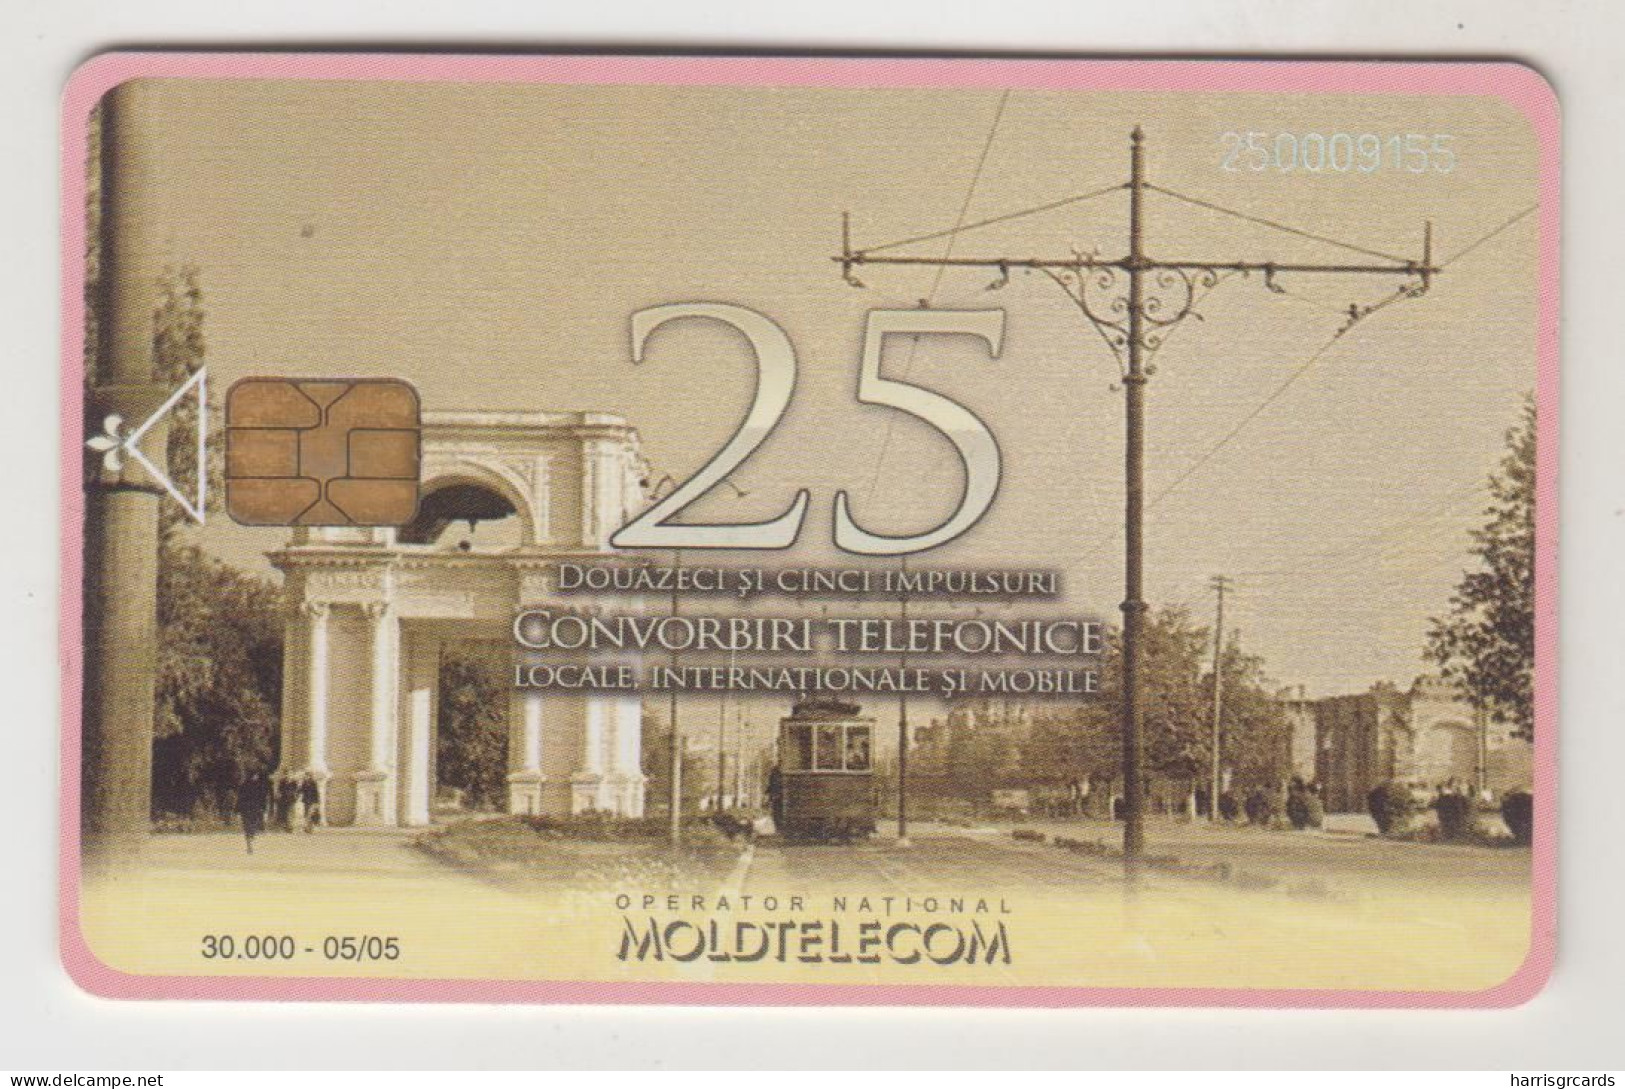 MOLDOVA - Strada Alexandru Cel Bun, Chip:CHT08, Moldtelecom 25 Units, 05/05, Tirage 30.000,used - Moldavia